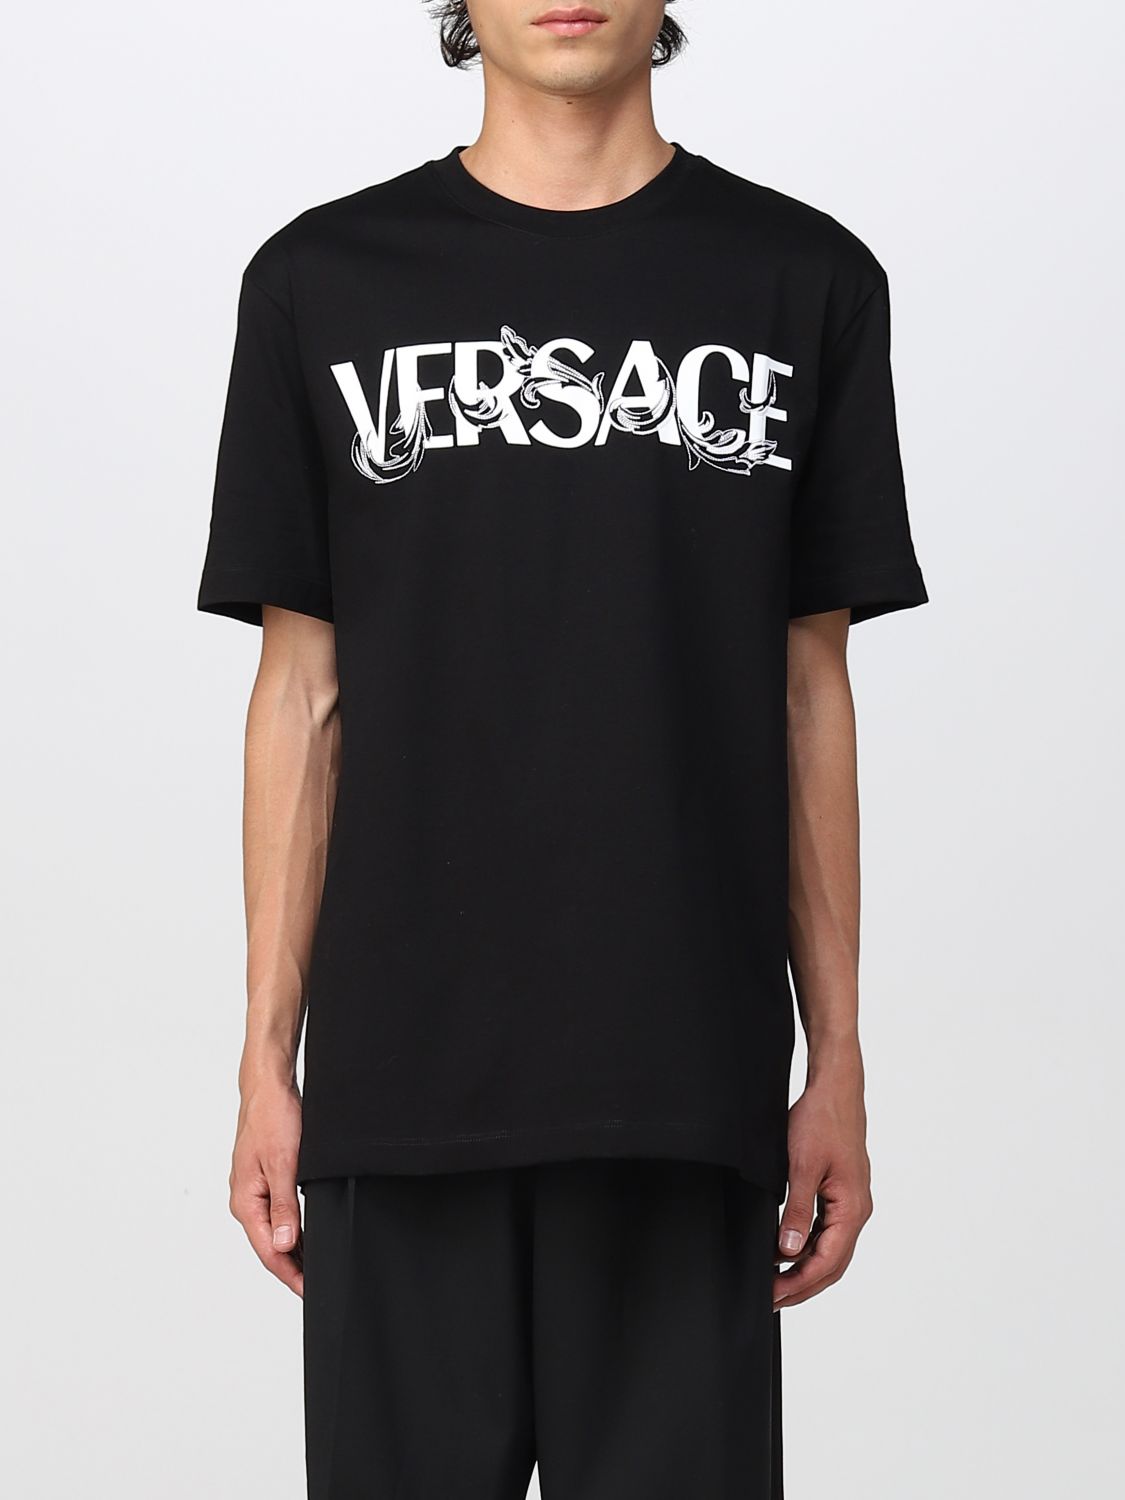 VERSACE: t-shirt with logo print - Black | Versace t-shirt ...